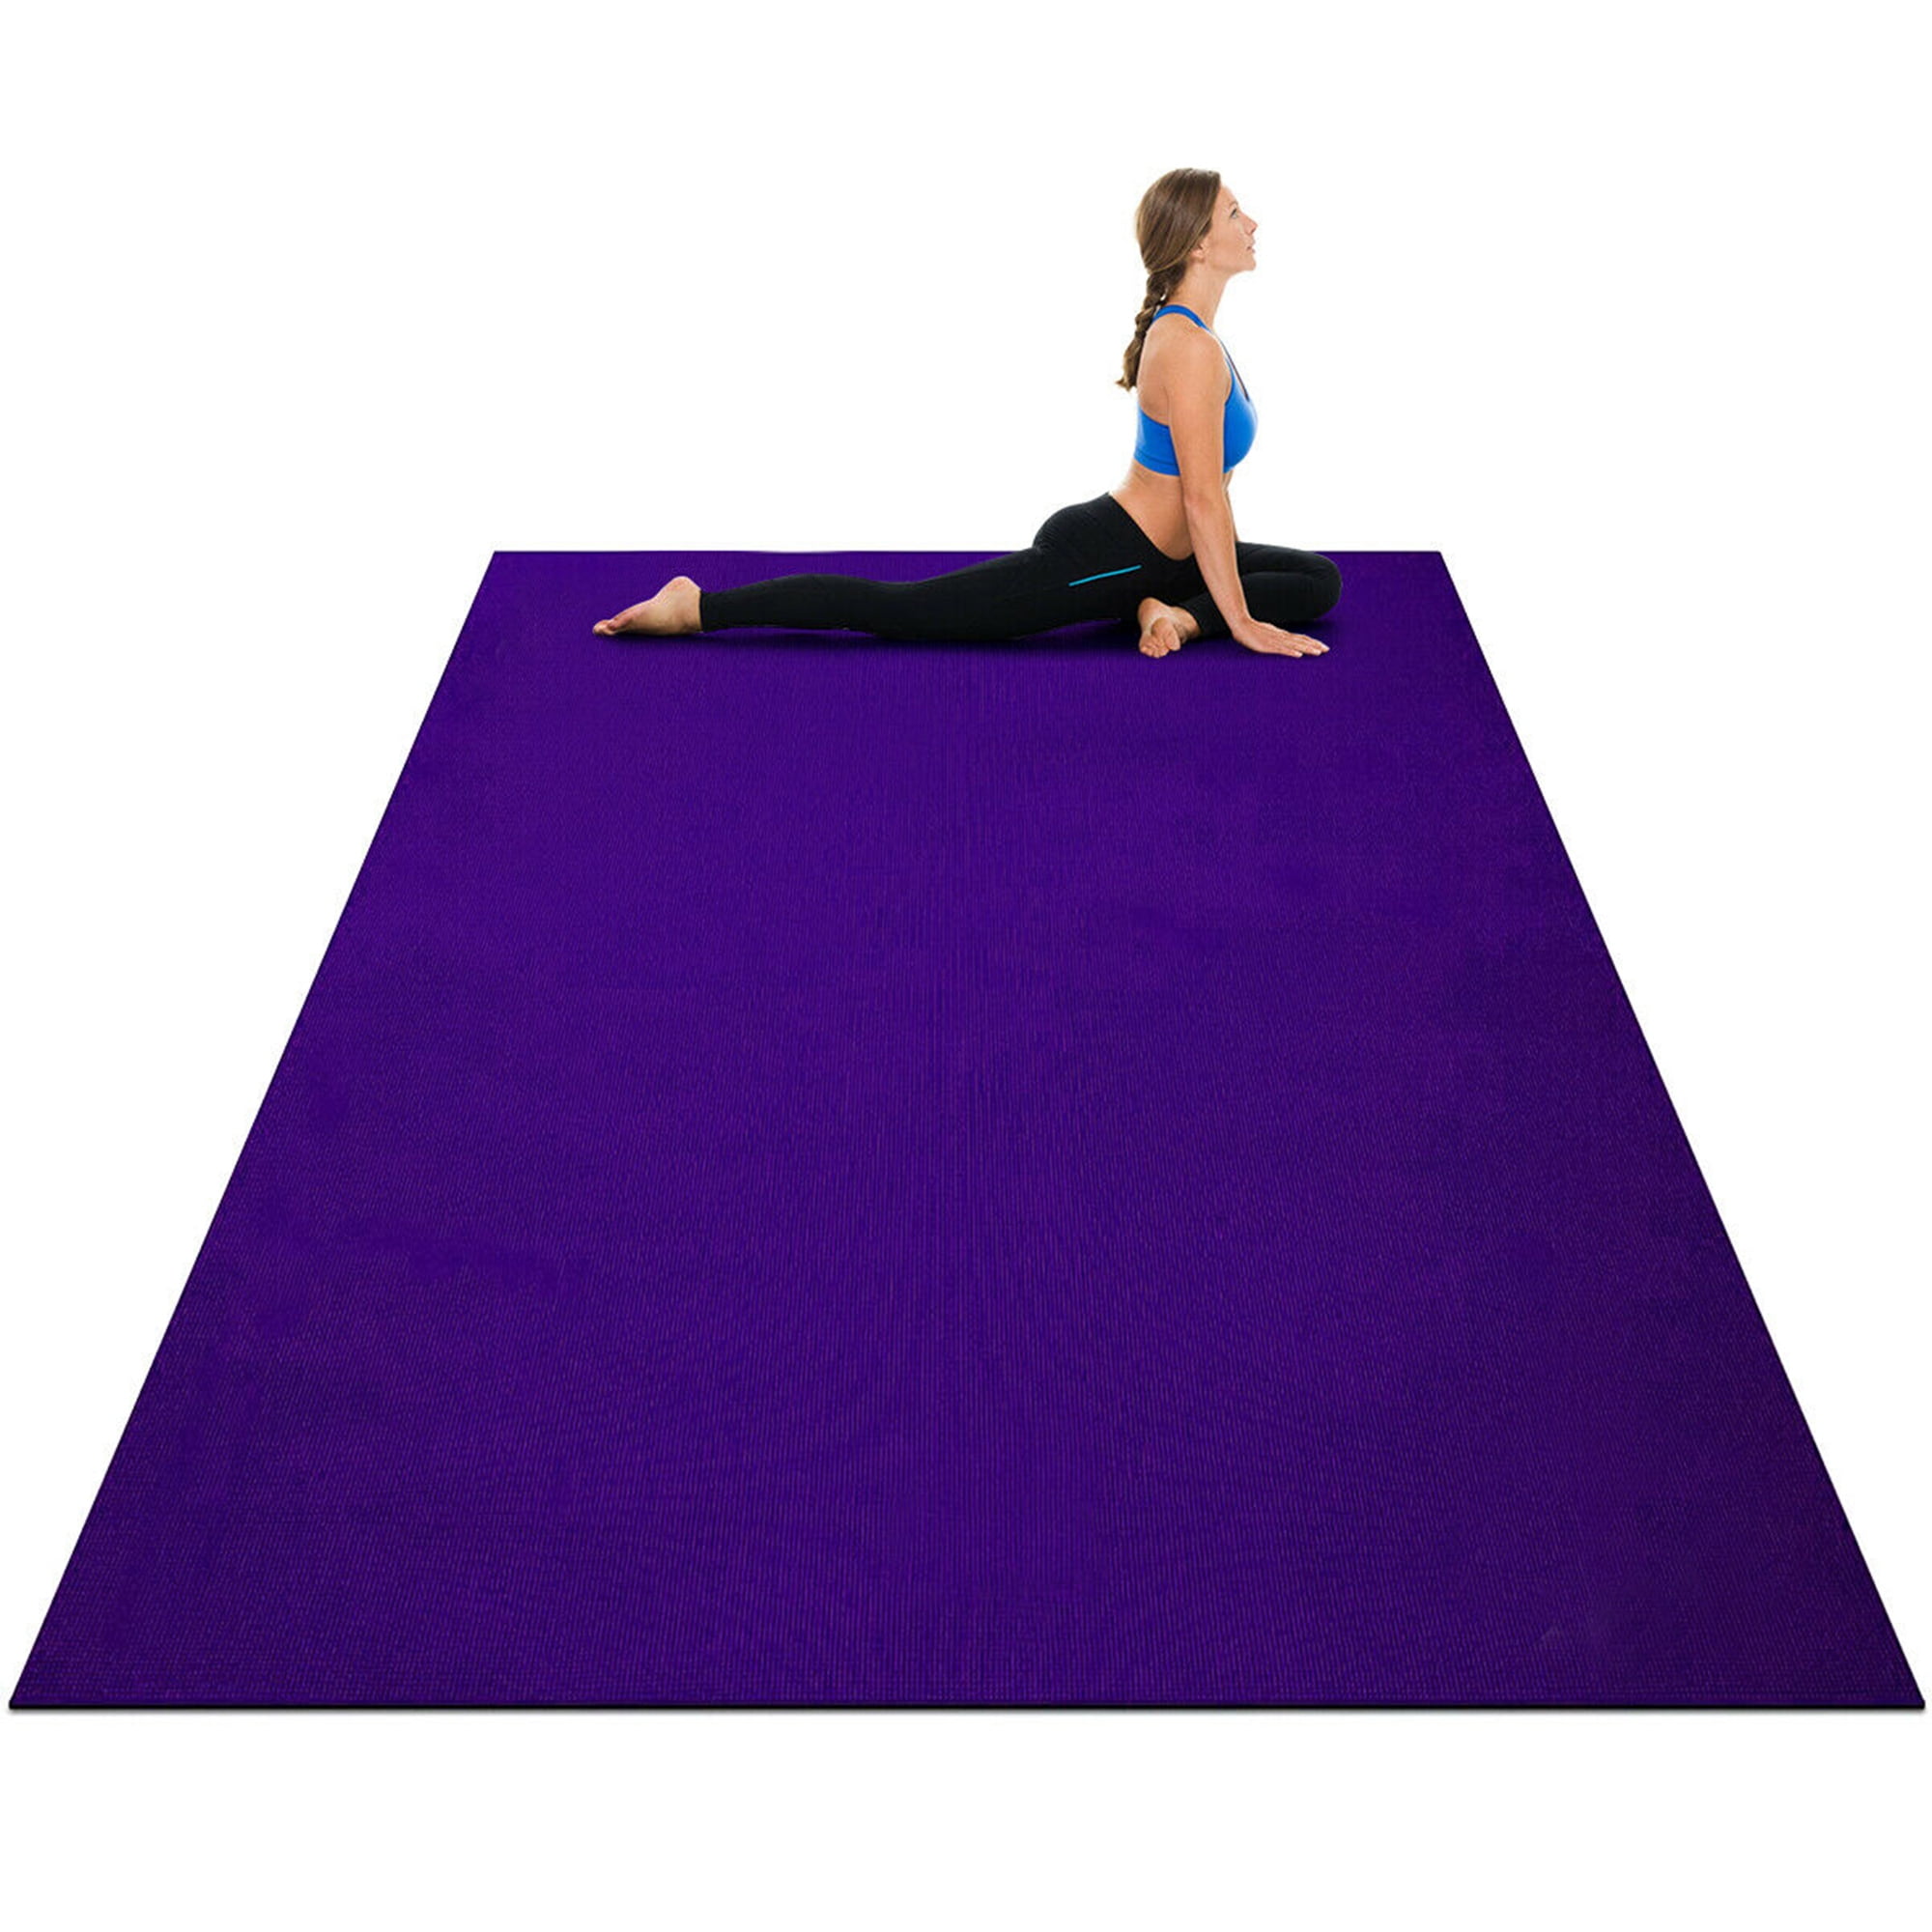 Extra Wide Non Slip Sustainable Asana Tree Pro Grip Large Yoga Mat Purple 